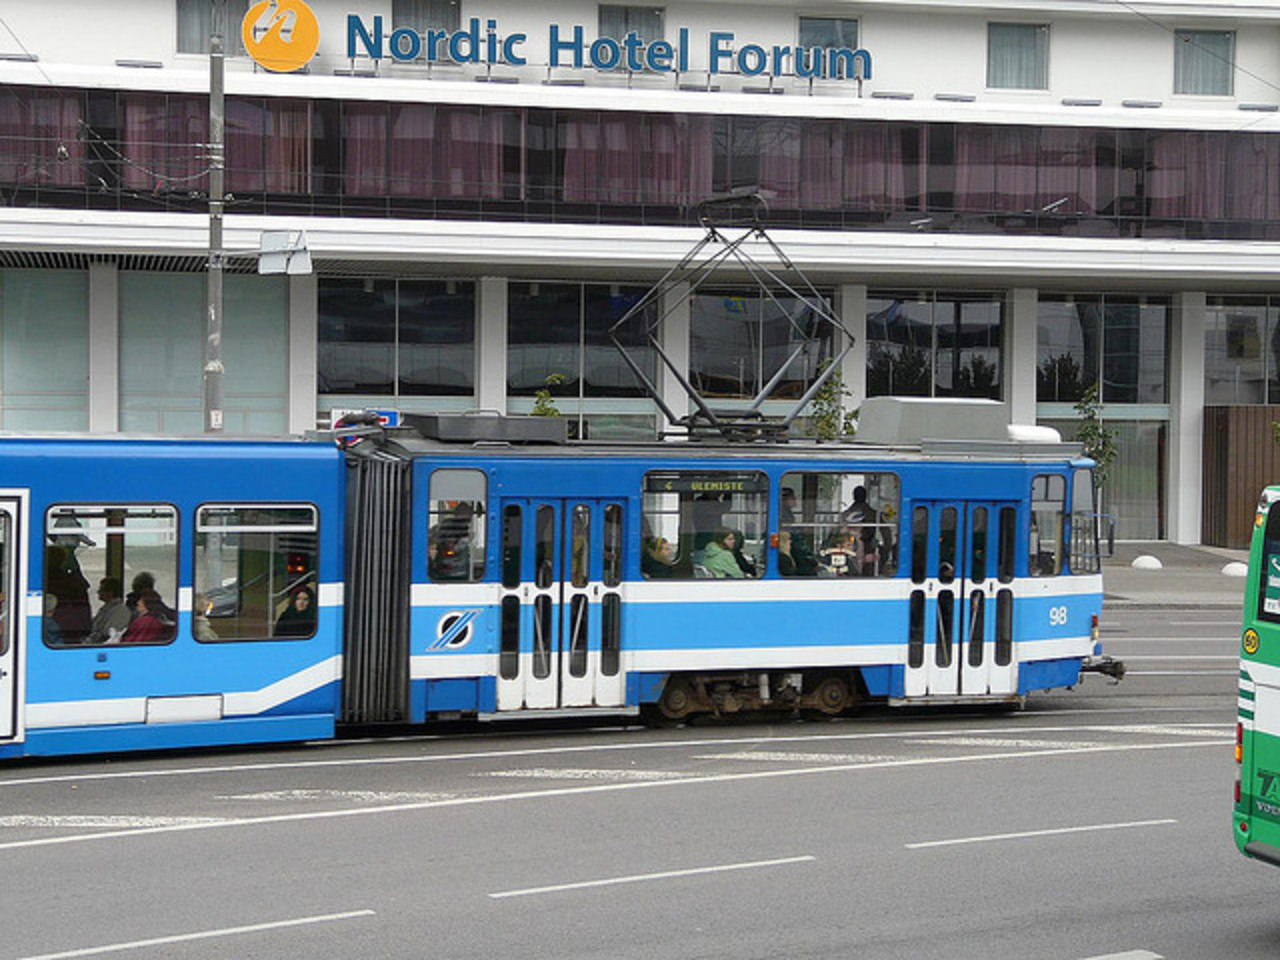 Nordic Hotel Forum and czech Tatra tram - Tallinn Estonia | Flickr ...